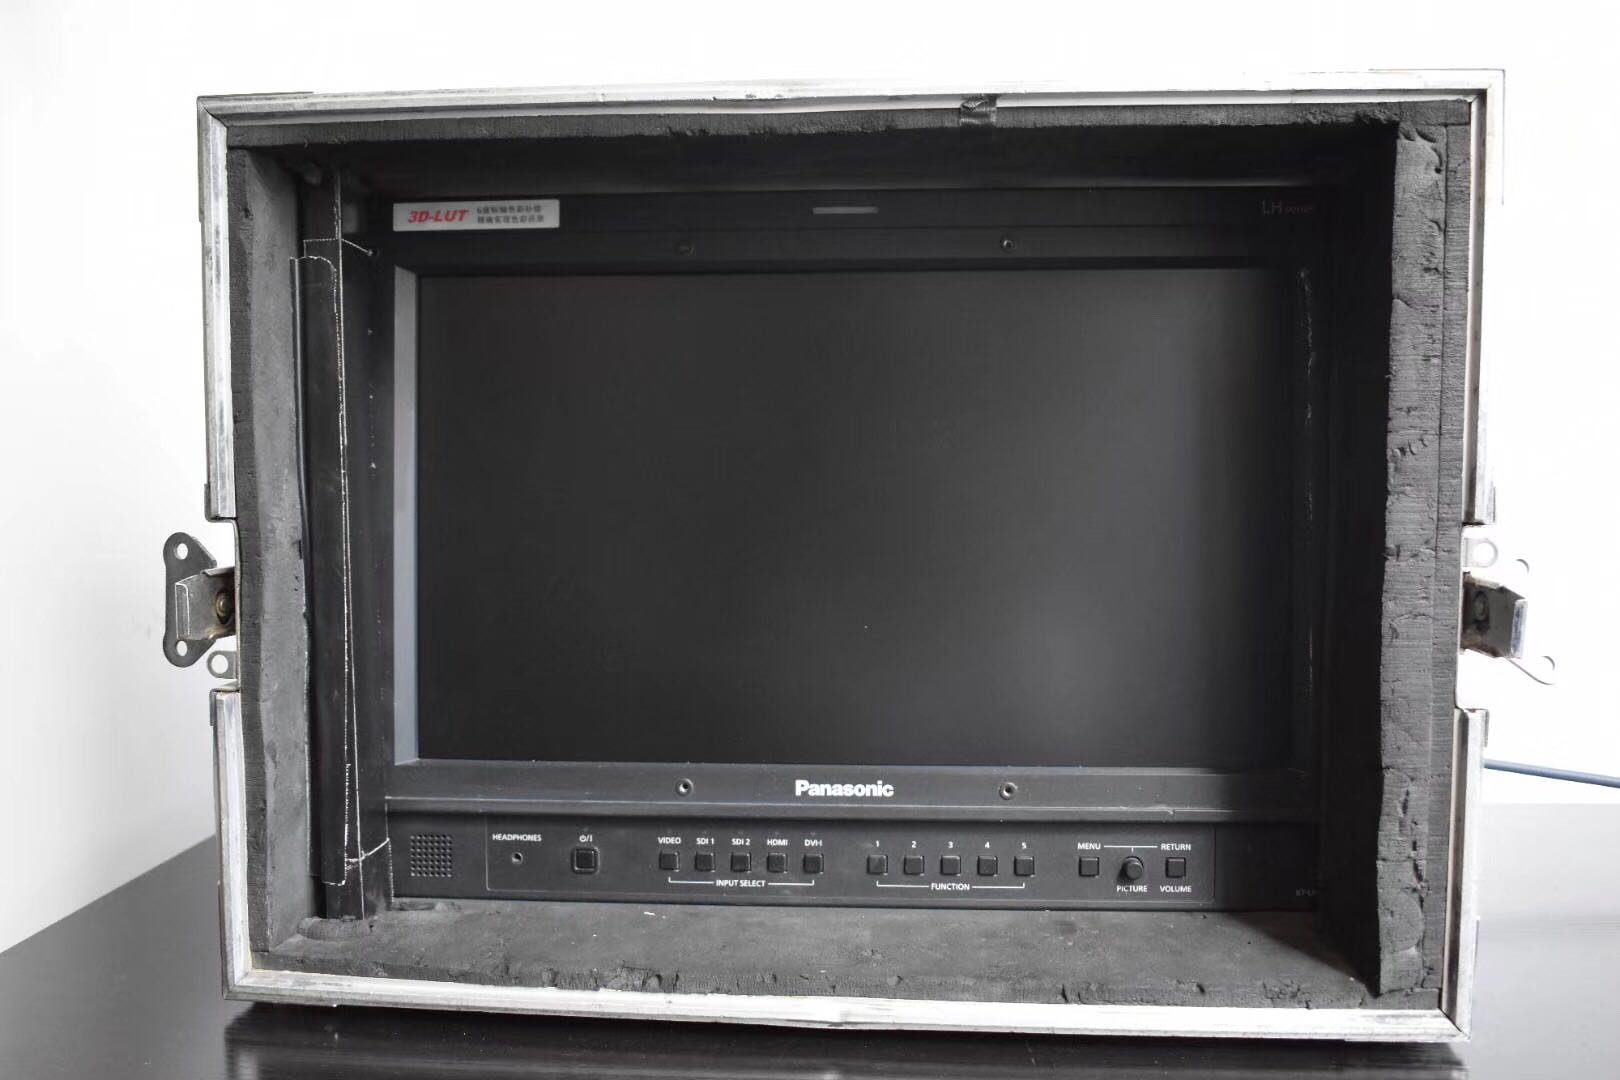  Sold second-hand Panasonic 1850 monitors